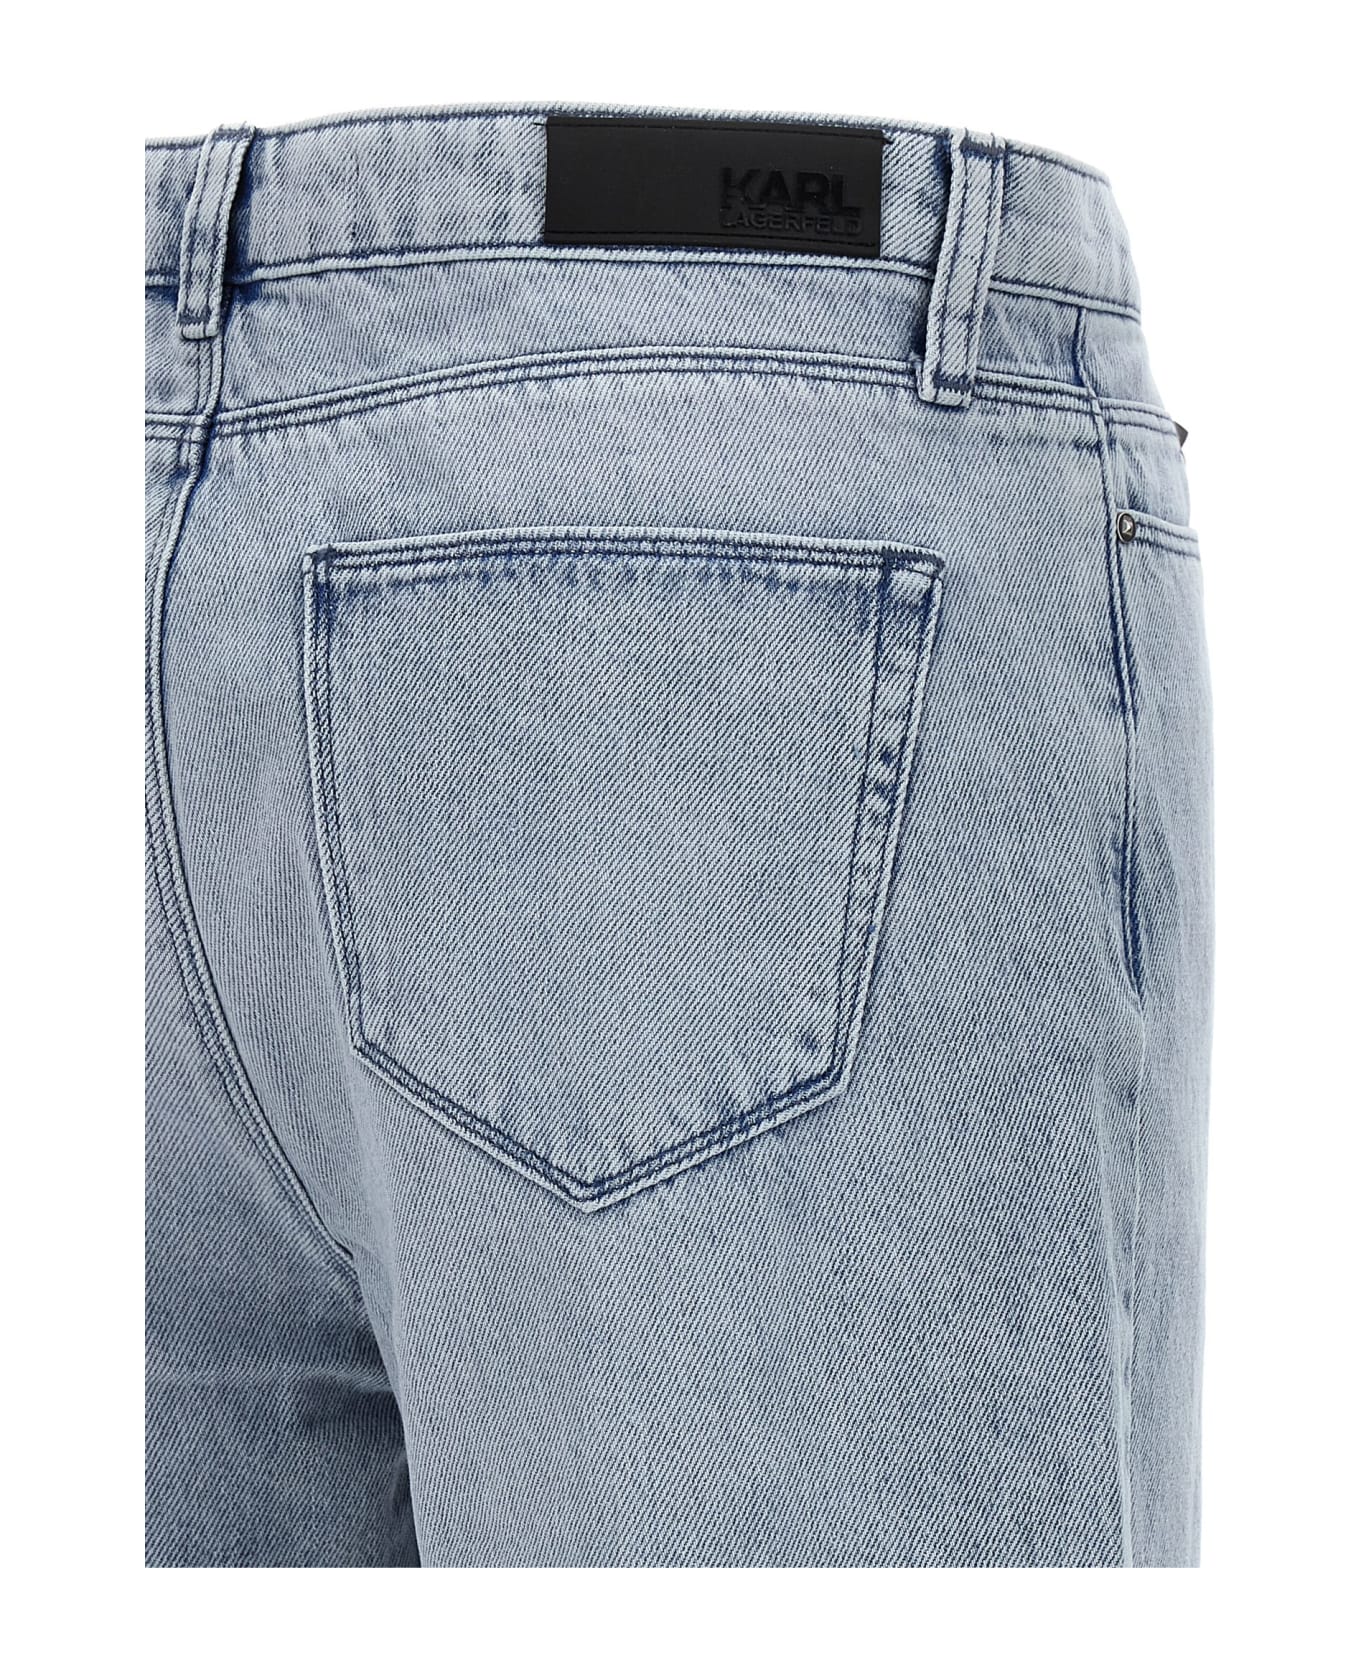 Karl Lagerfeld Rhinestone Fringed Jeans - Light Blue